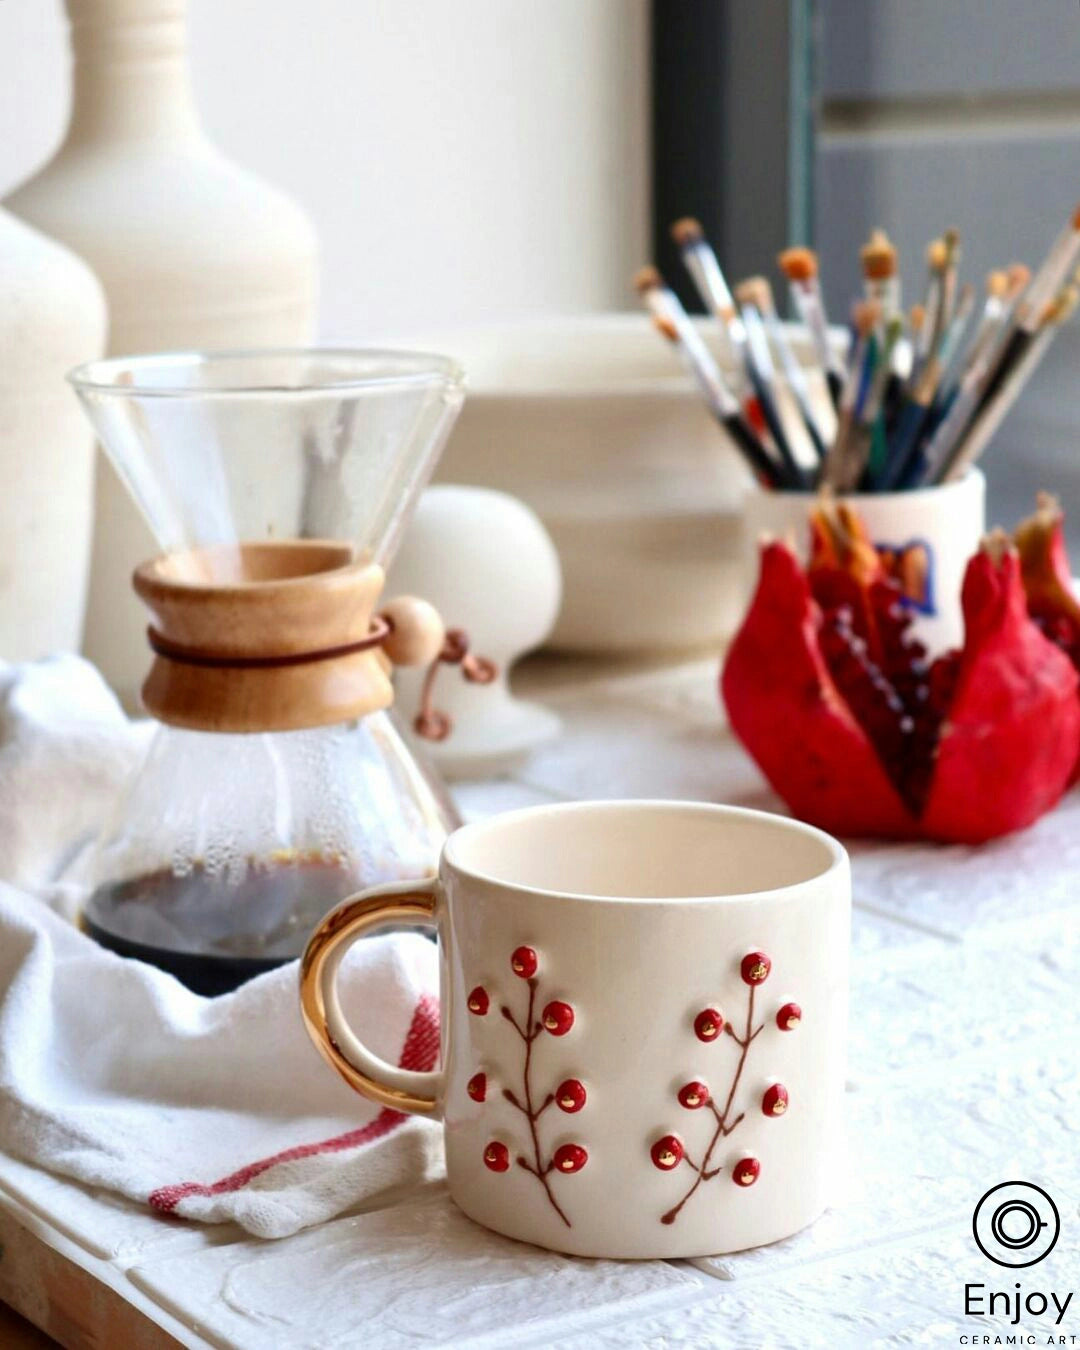 Akiletus Winterberry Holly Handmade Ceramic Coffee Mug with Gold Handle - A Festive 10 oz Espresso Cup for the Holiday Season